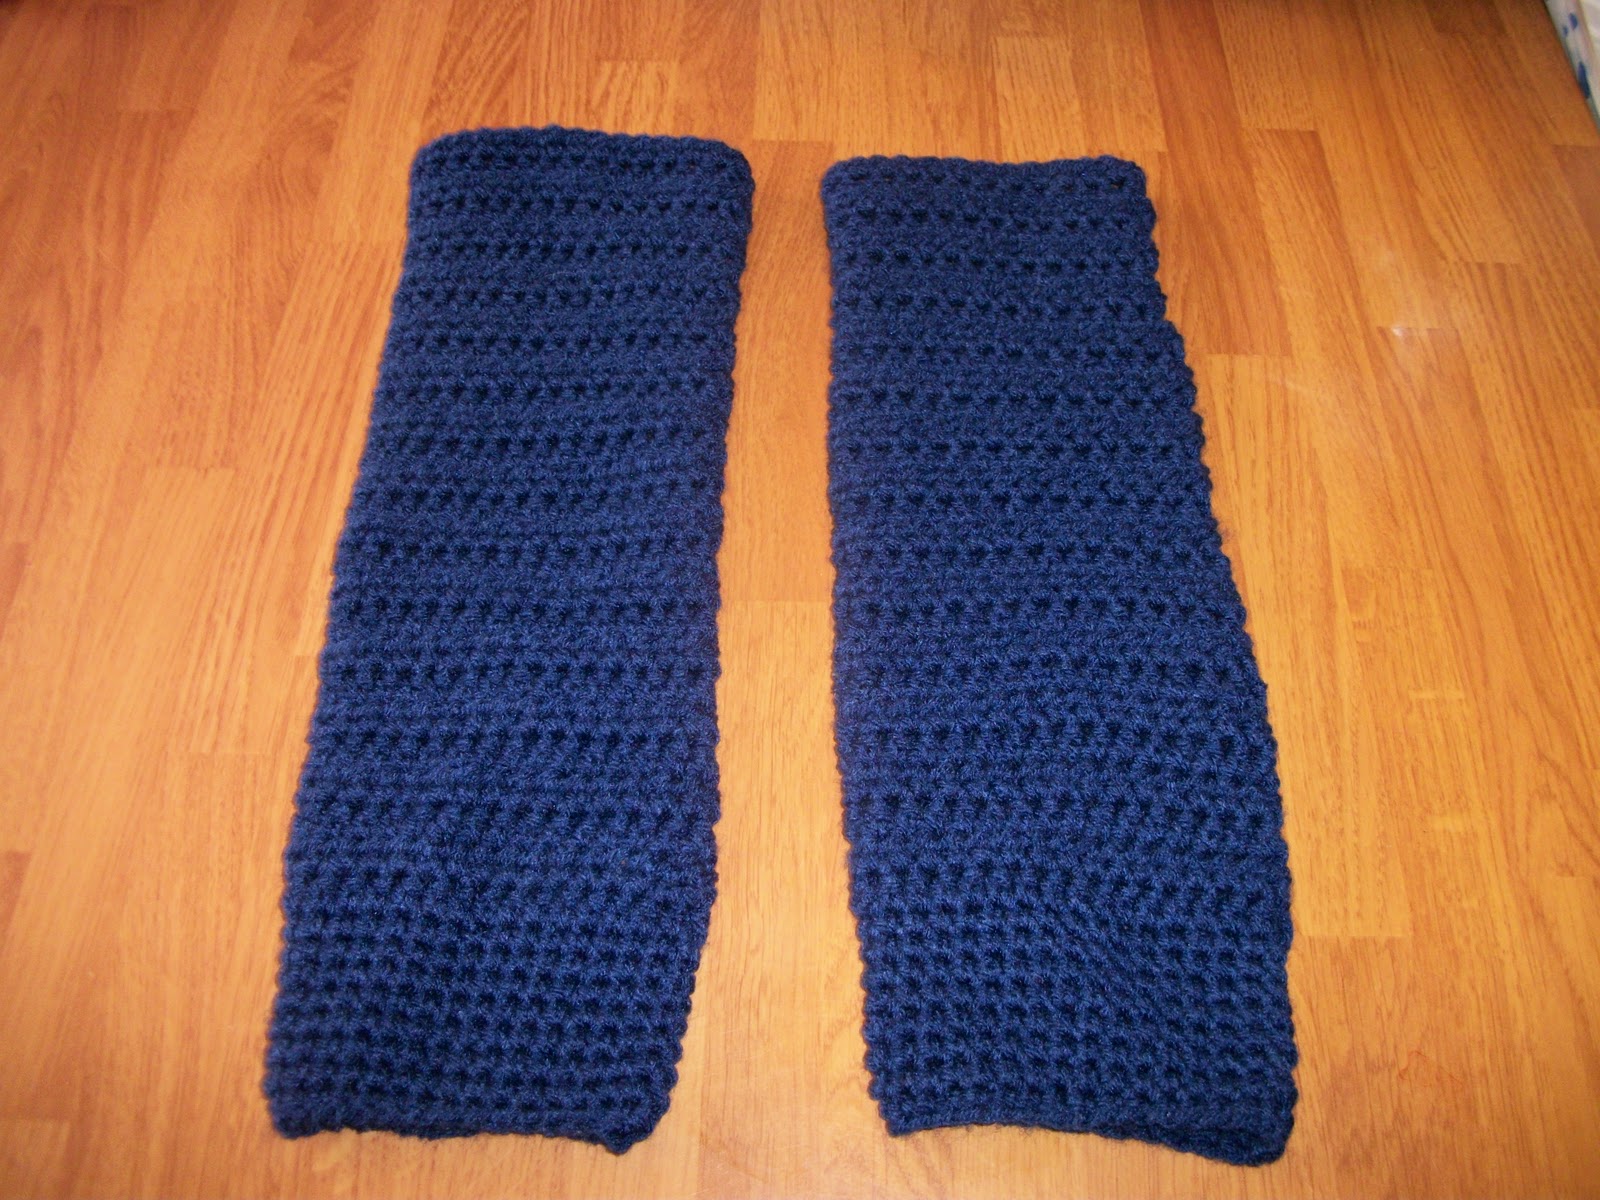 Knitted Leg Warmer Patterns